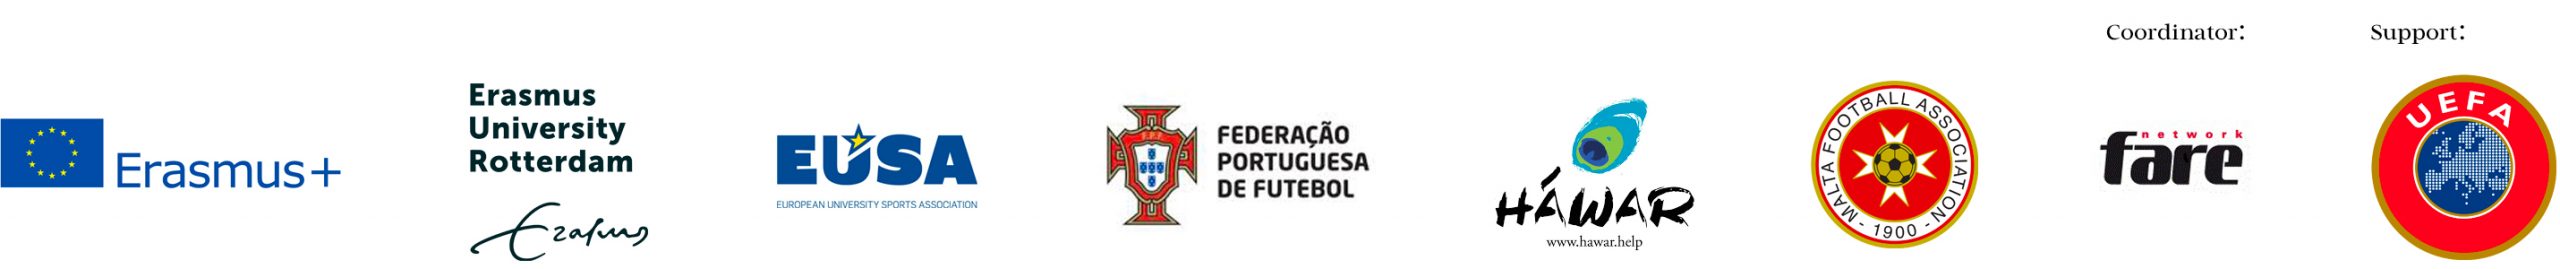 iFlipp partners logos: Erasmus+, Erasmus University of Roterdam, Portuguese FA, Hawar.Help, Malta Football Association, Fare Network (coordinator), UEFA (supporter)